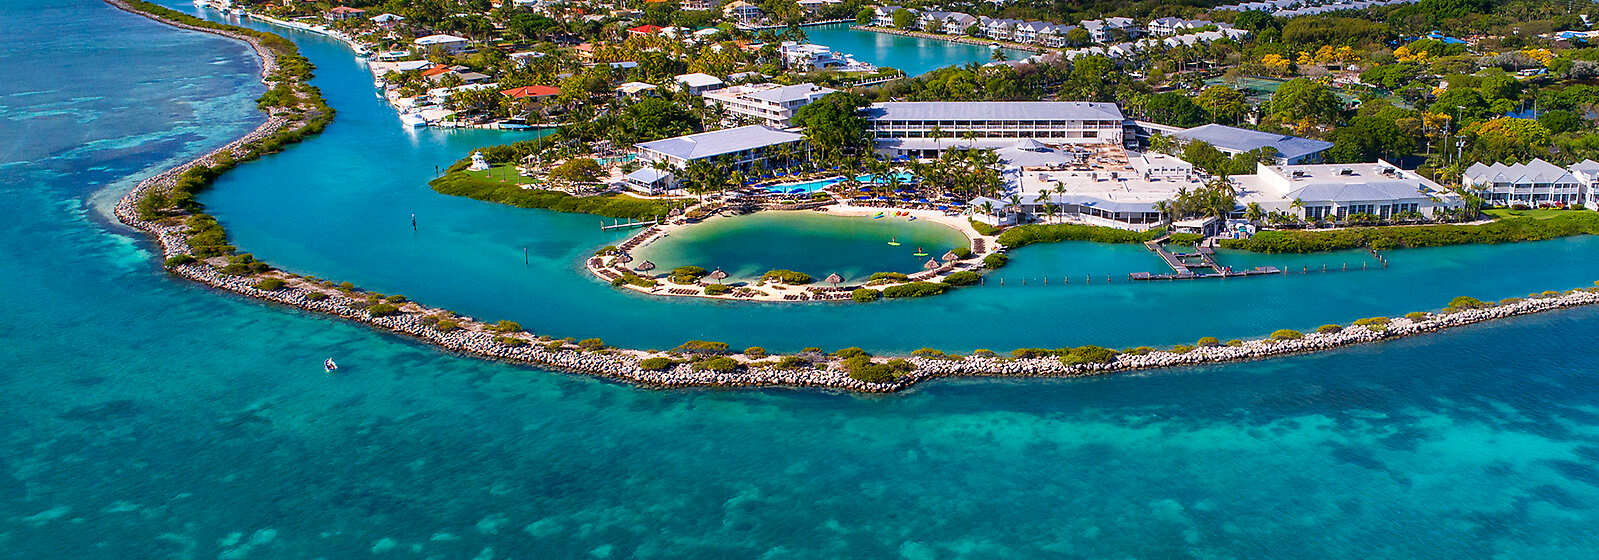 Hawks Cay Resort aerial view